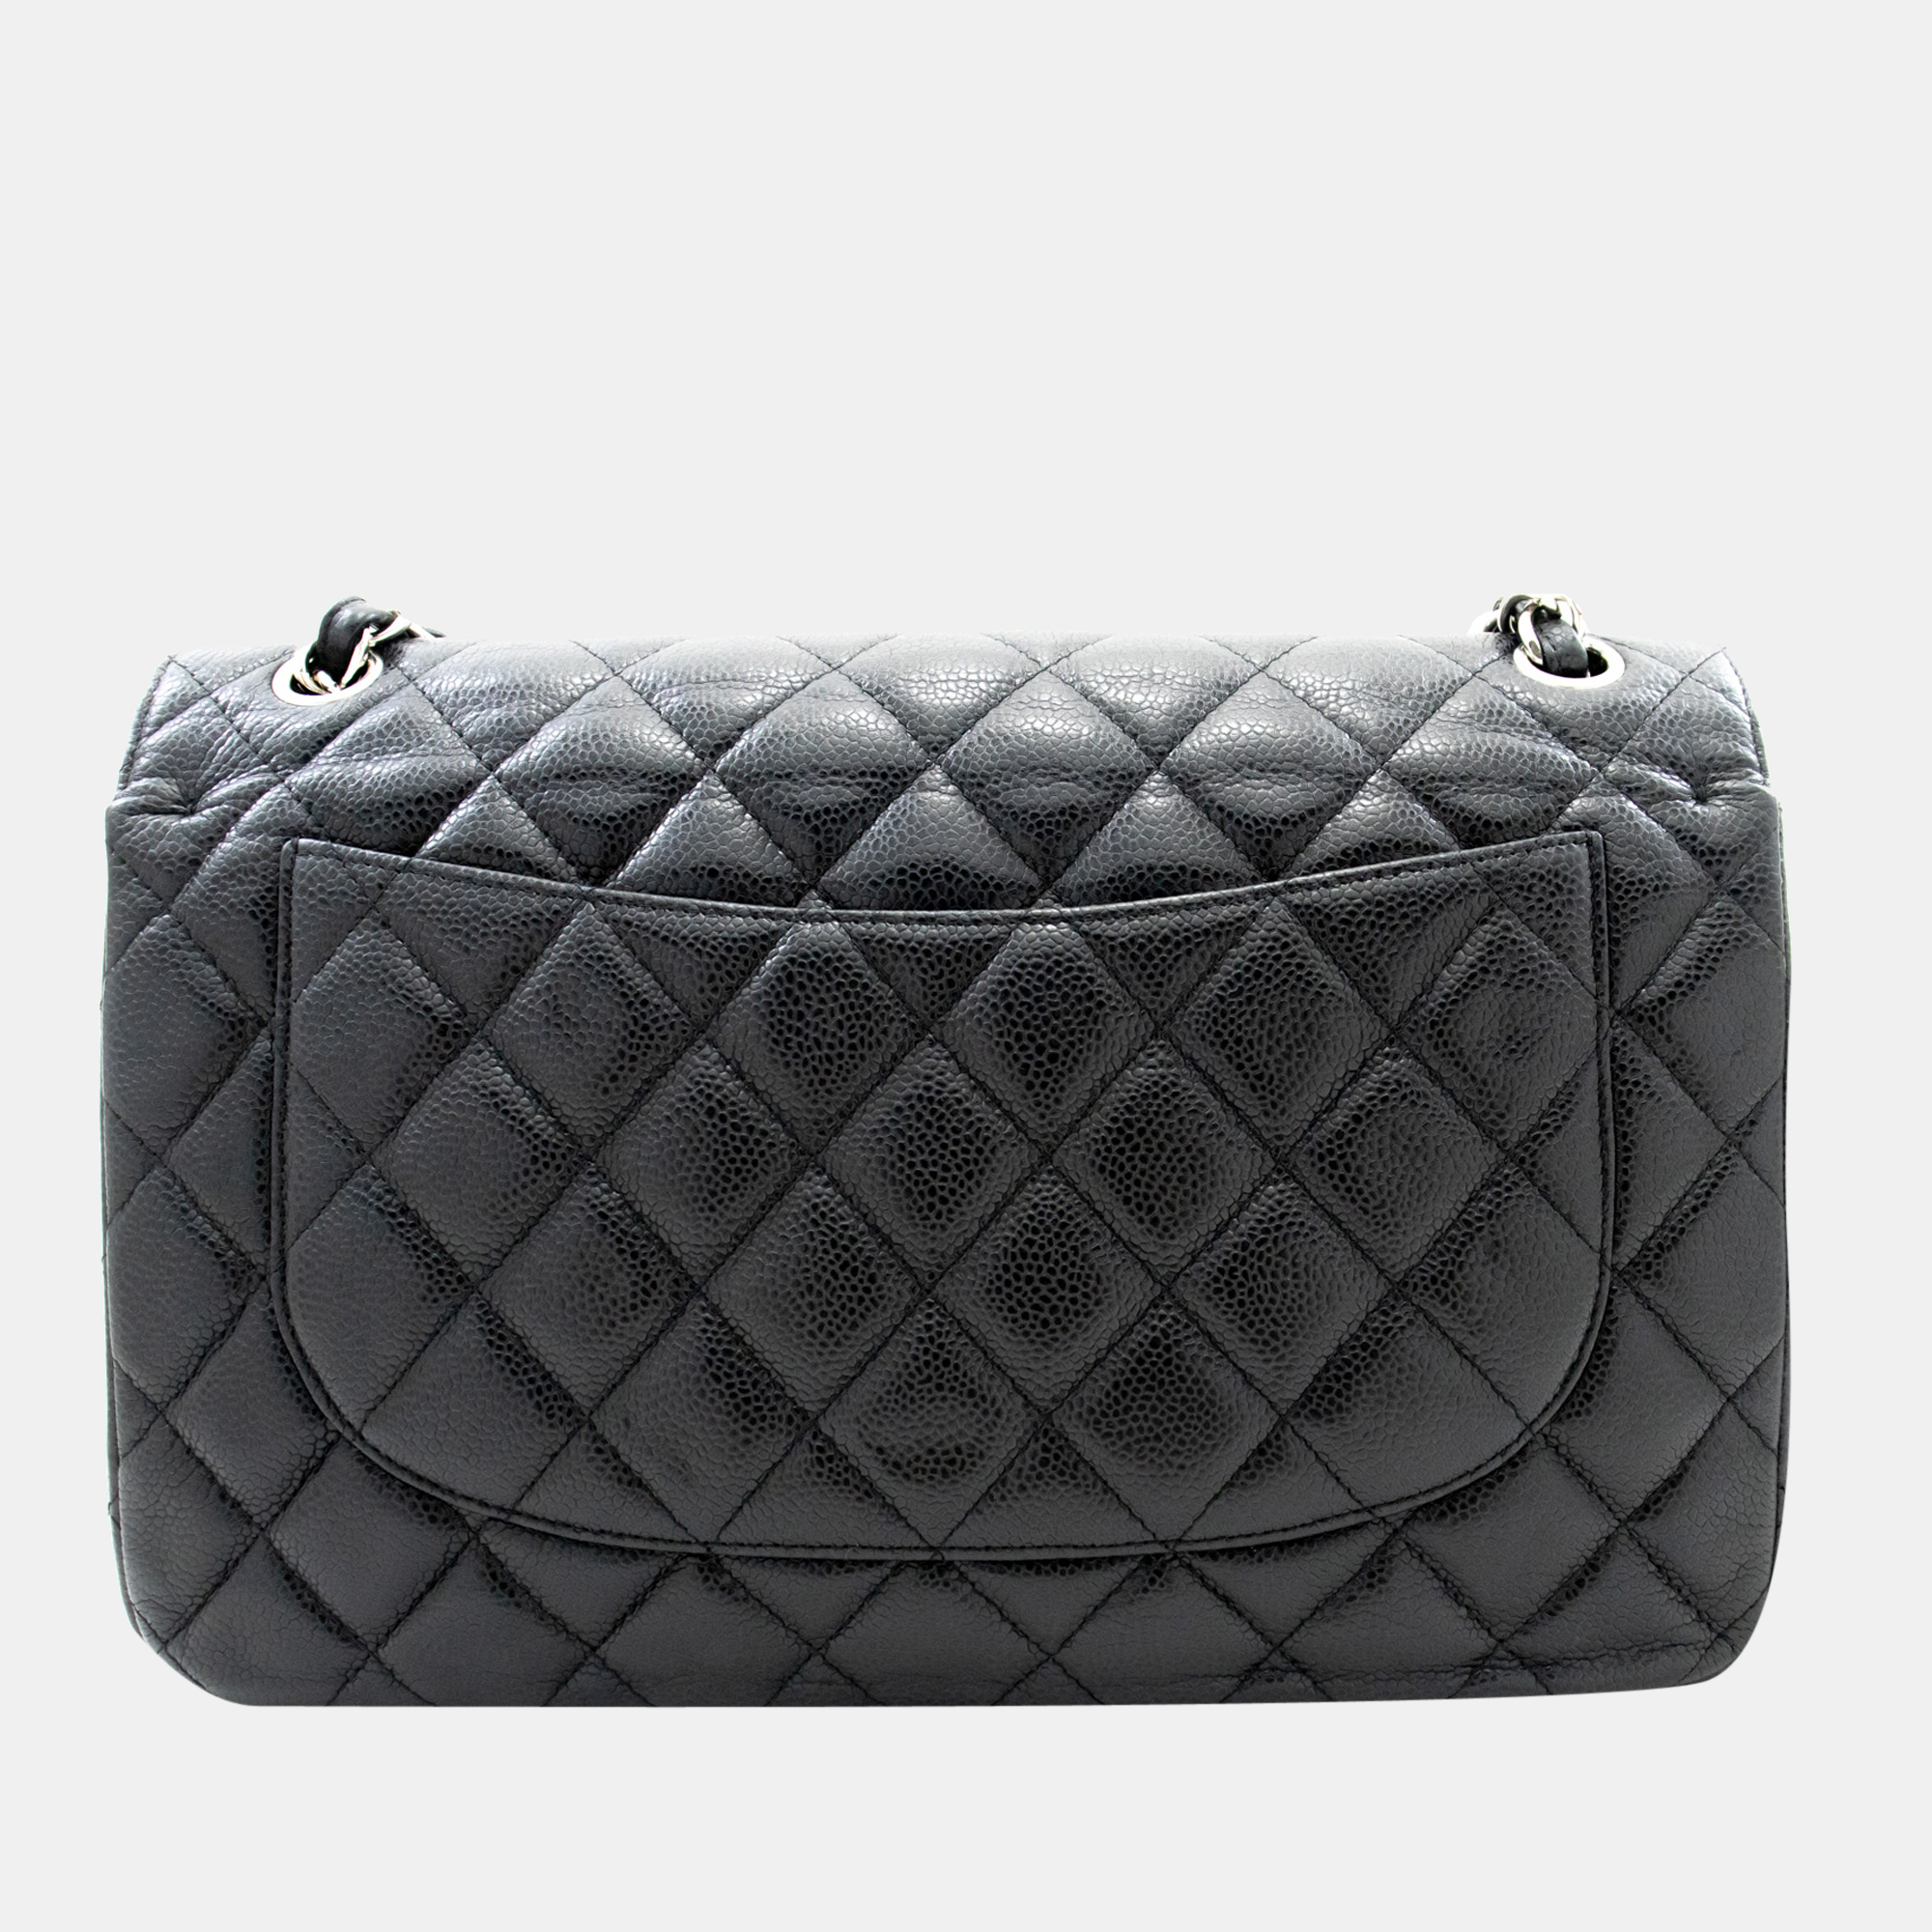 Chanel Black Calfskin Leather Jumbo Classic Double Flap Shoulder Bag